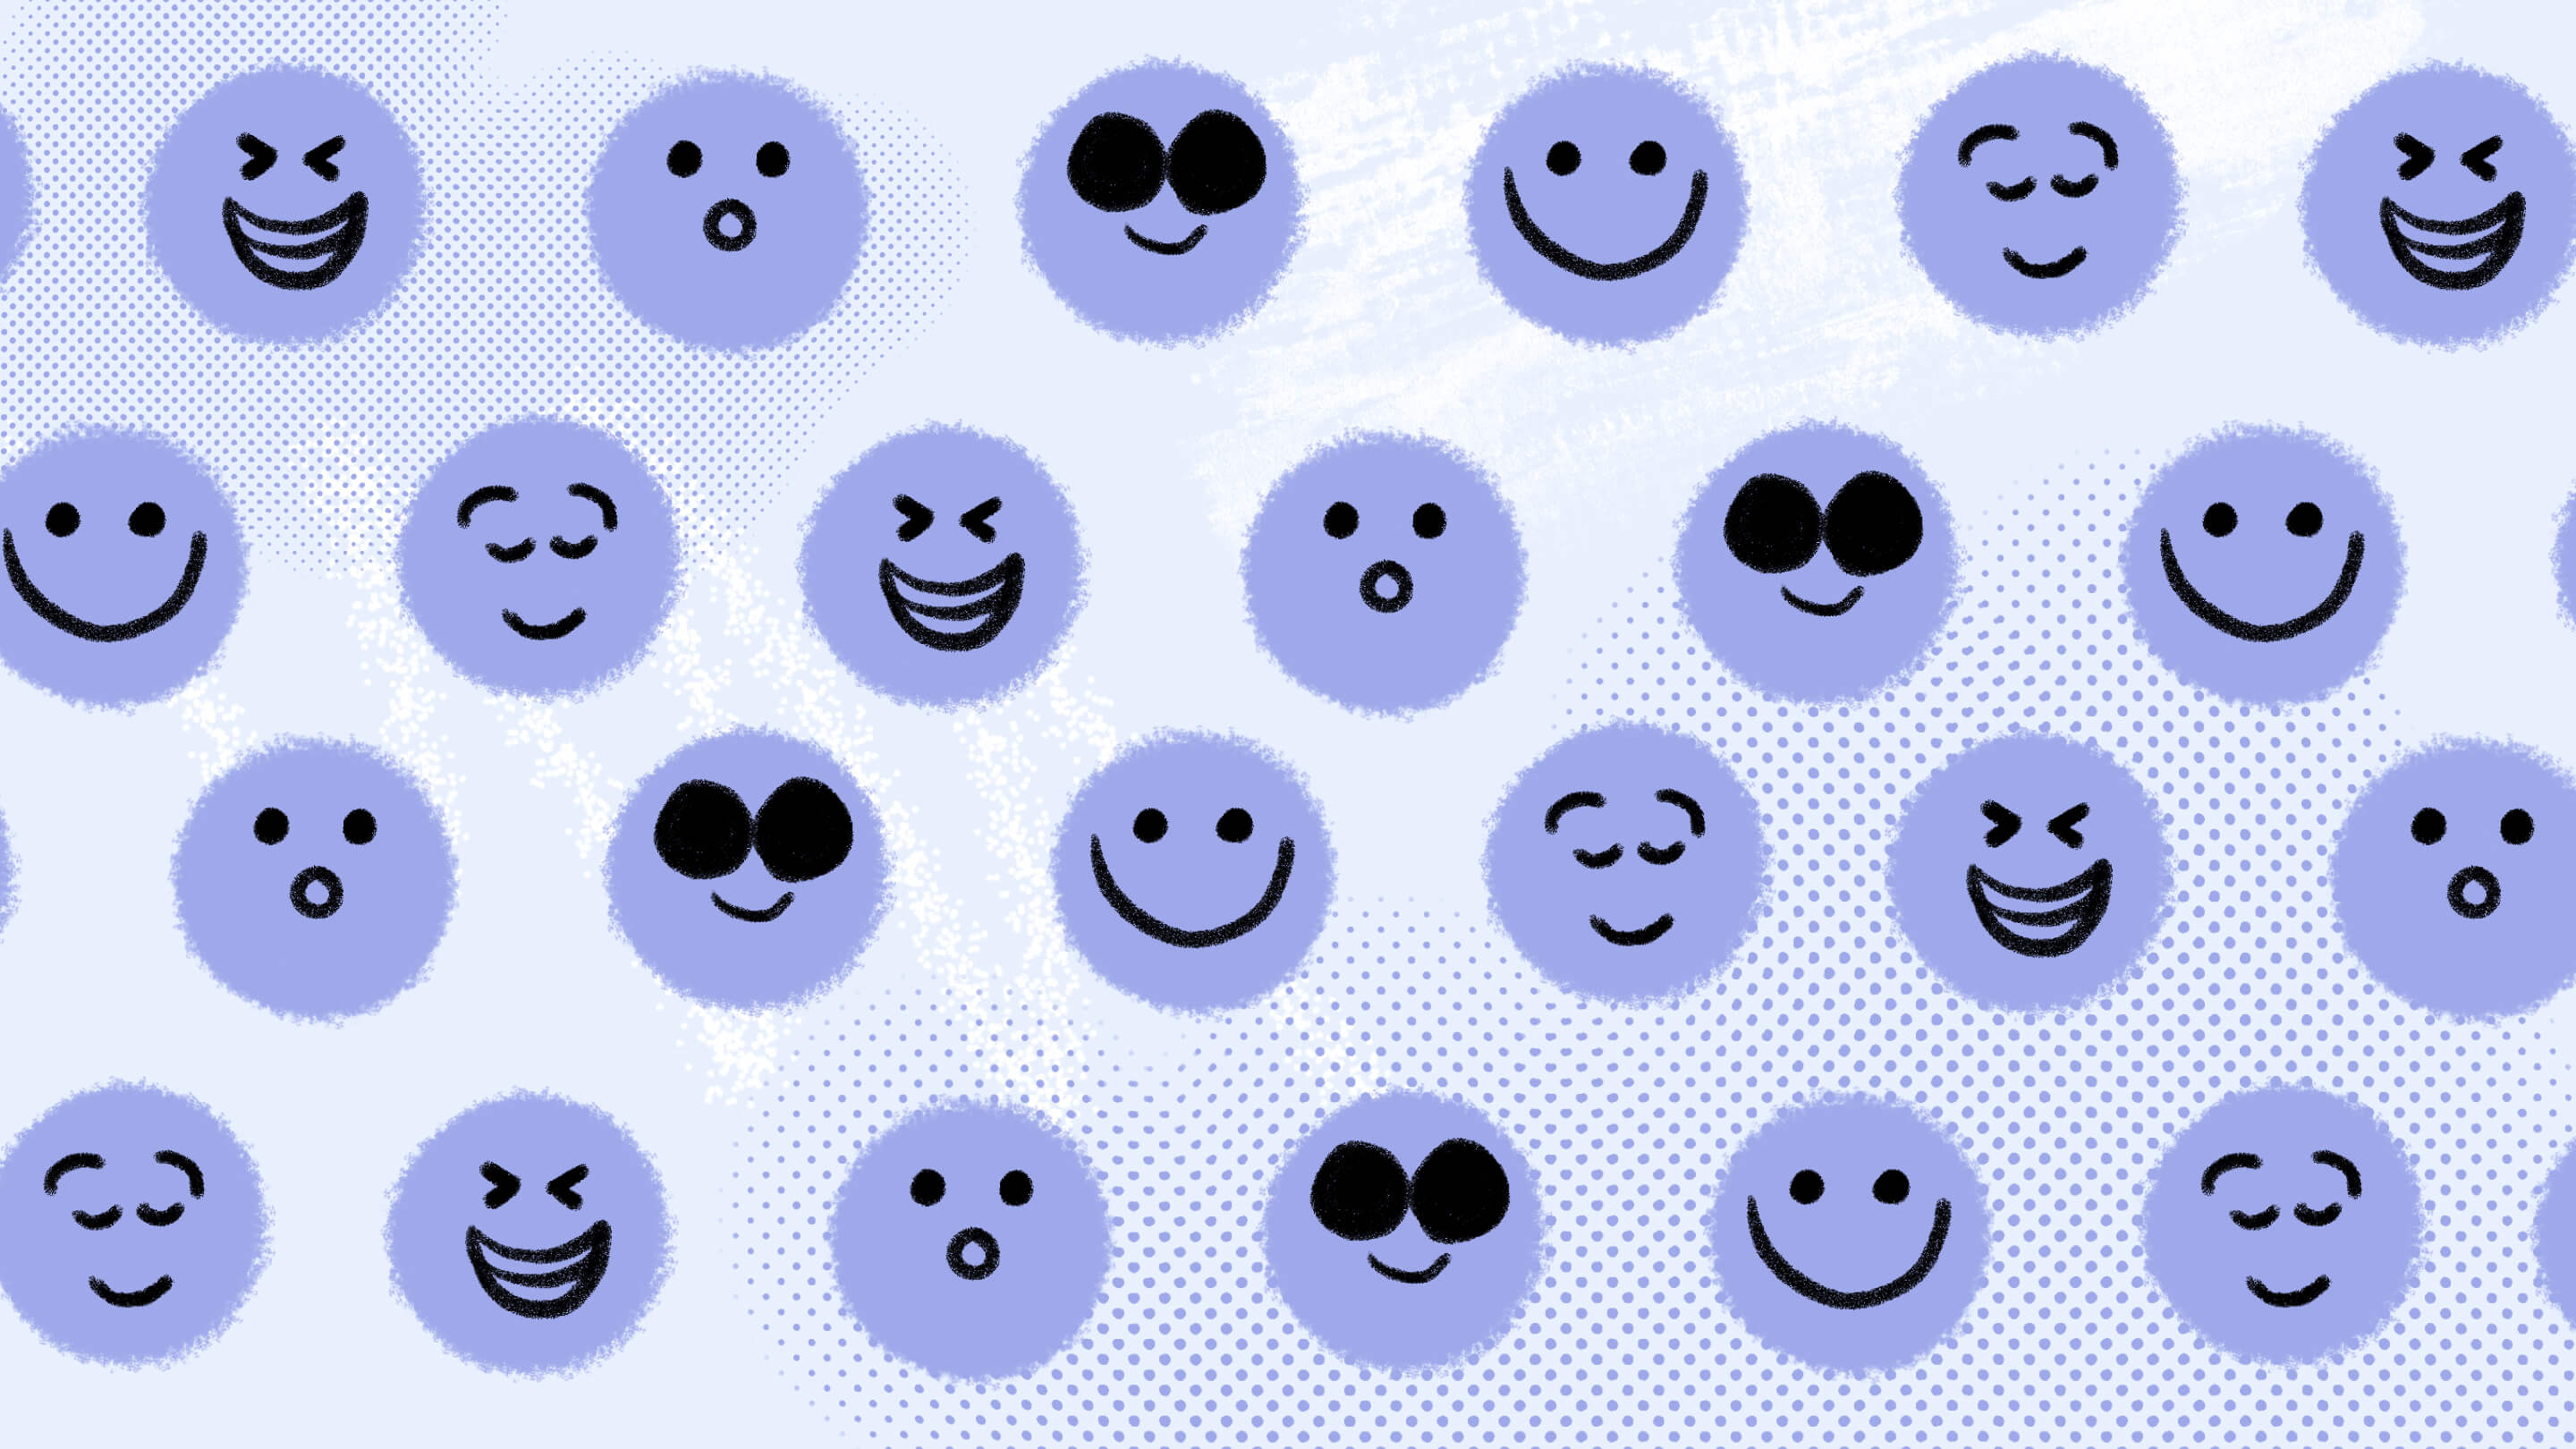 Sharegate Emojis Image Featured 12